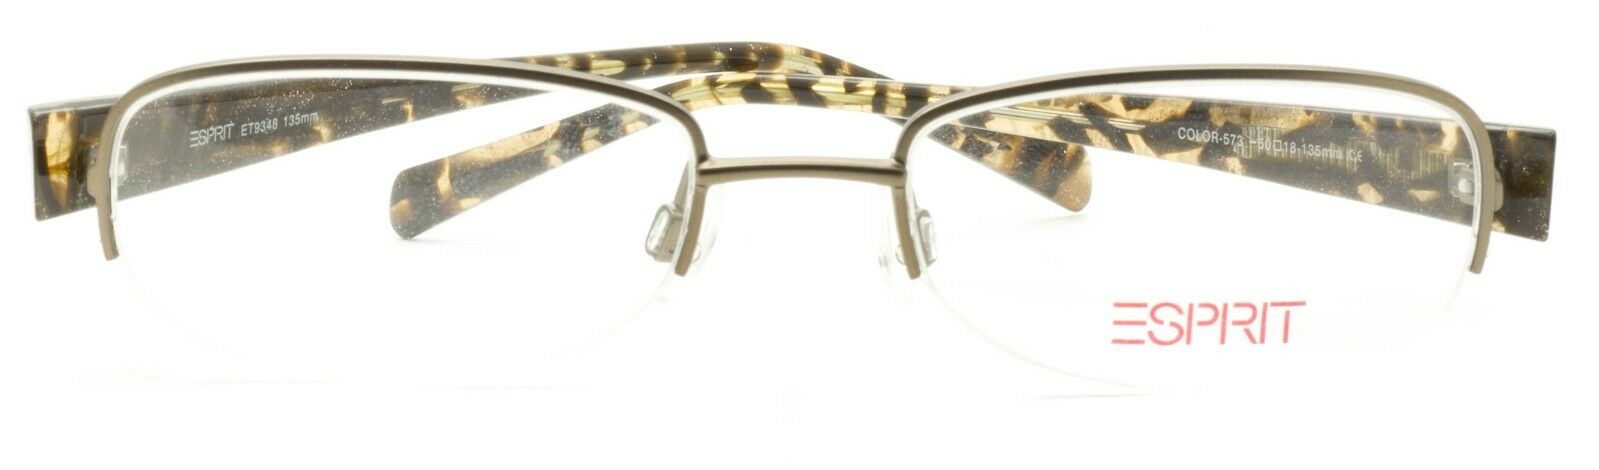 ESPRIT ET9348 COL. 573 Eyewear FRAMES RX Optical NEW Glasses Eyeglasses New BNIB